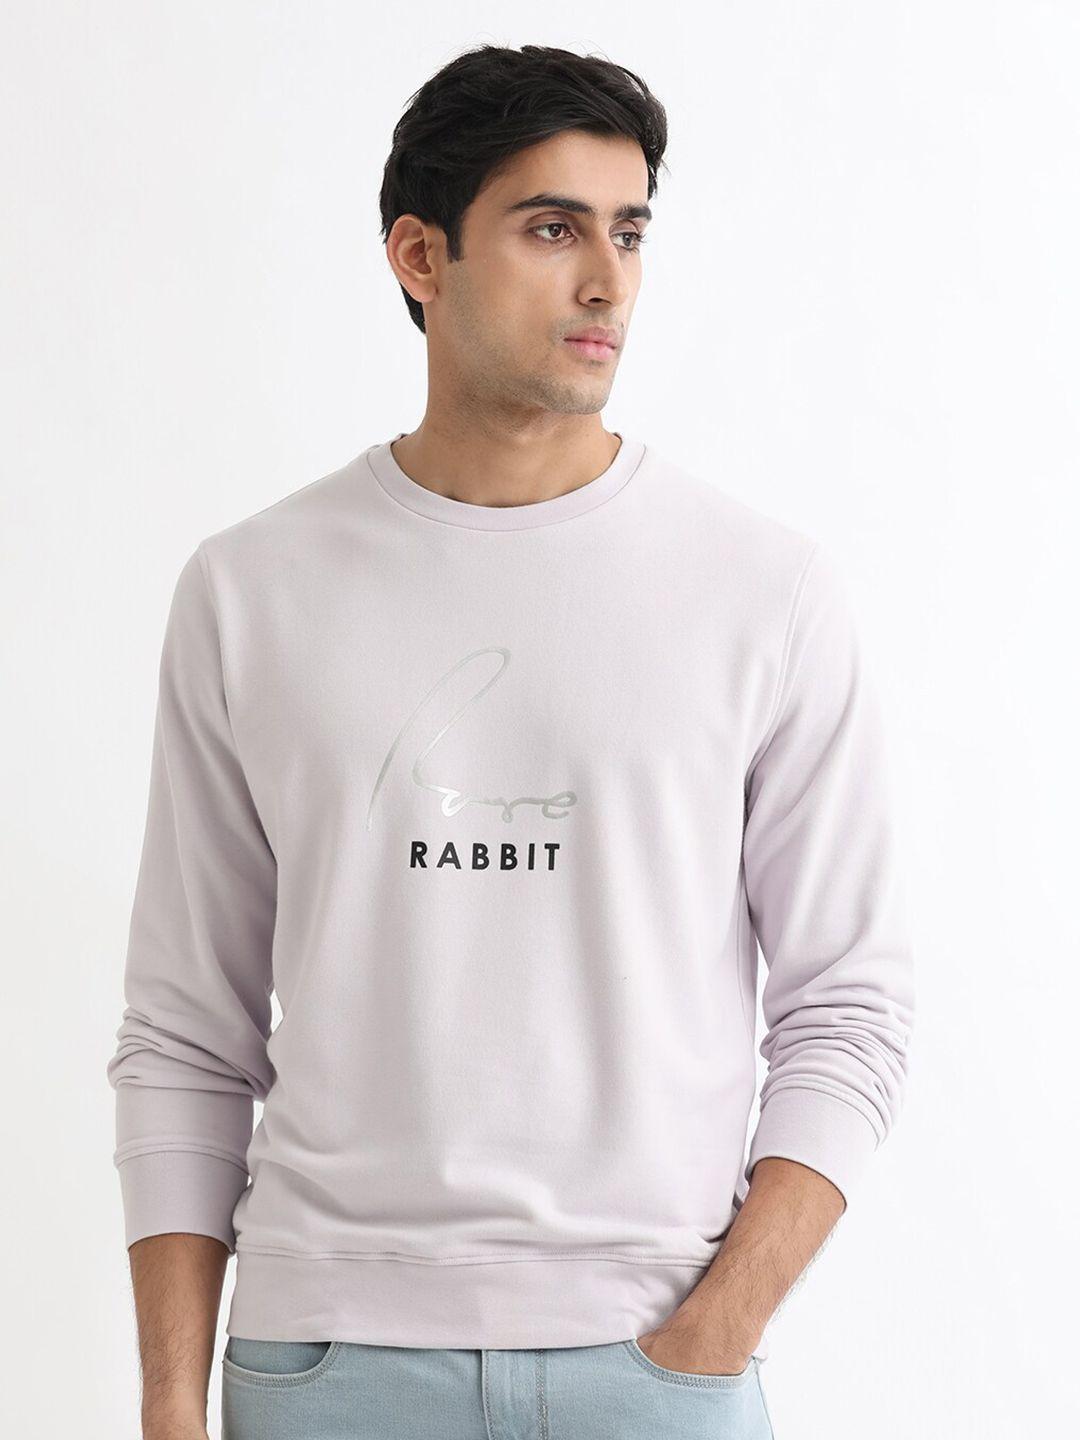 rare-rabbit-typography-printed-cotton-pullover